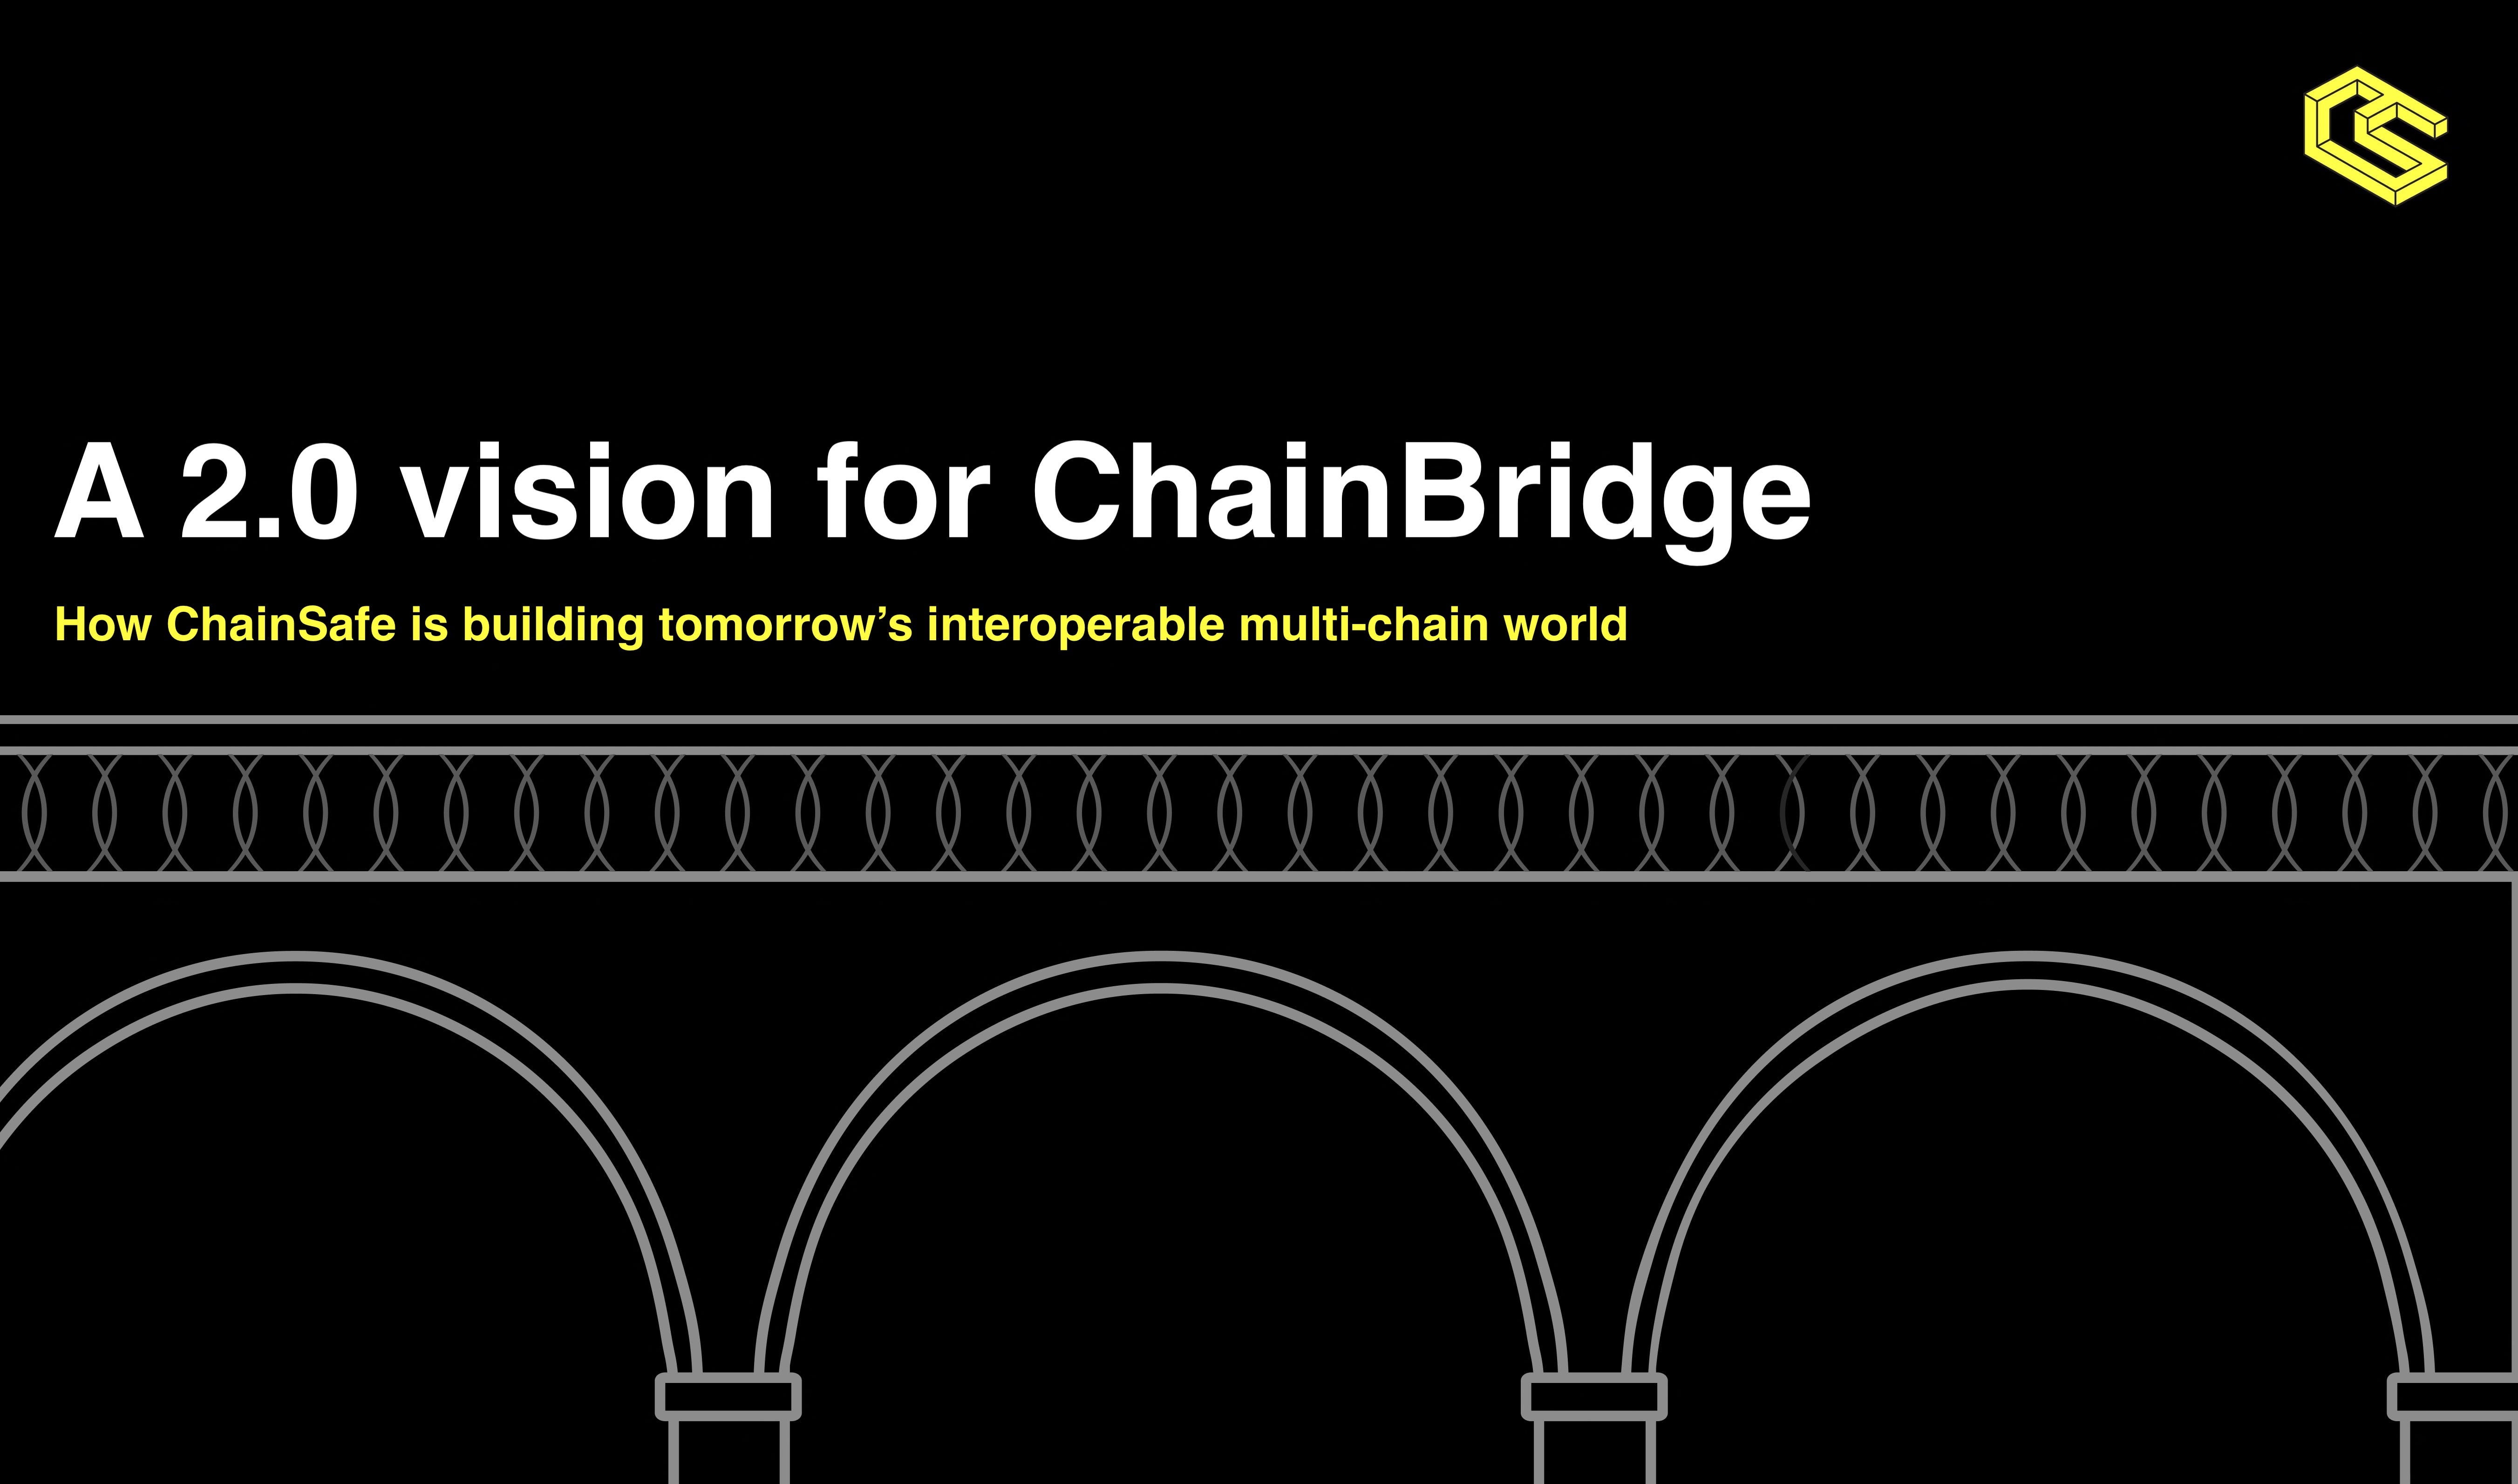 A 2.0 vision for ChainBridge